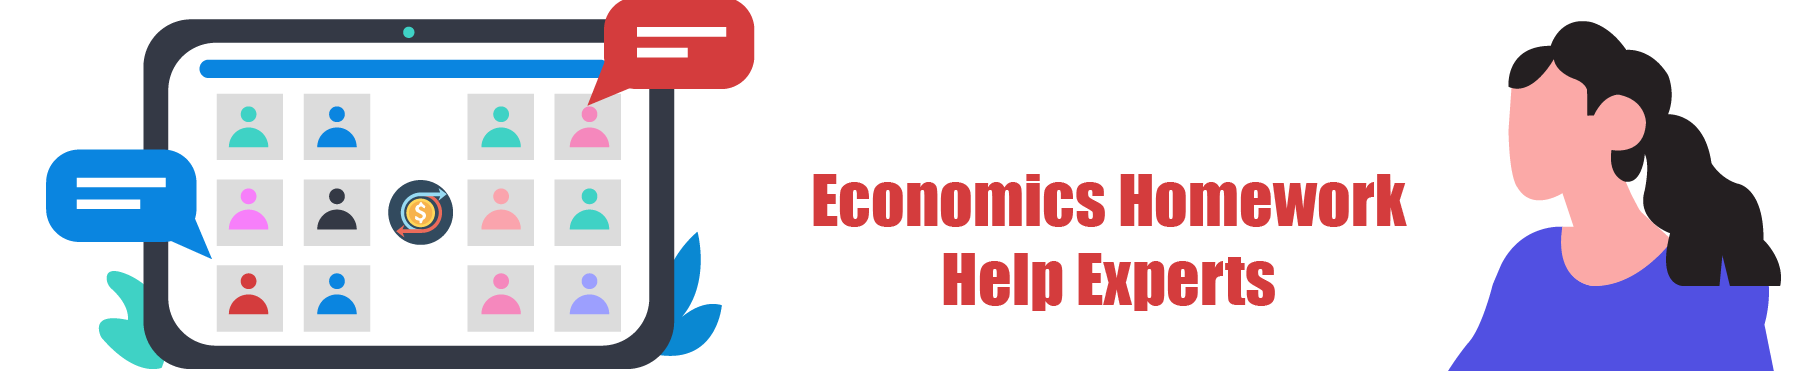 Economics Homework Help Experts